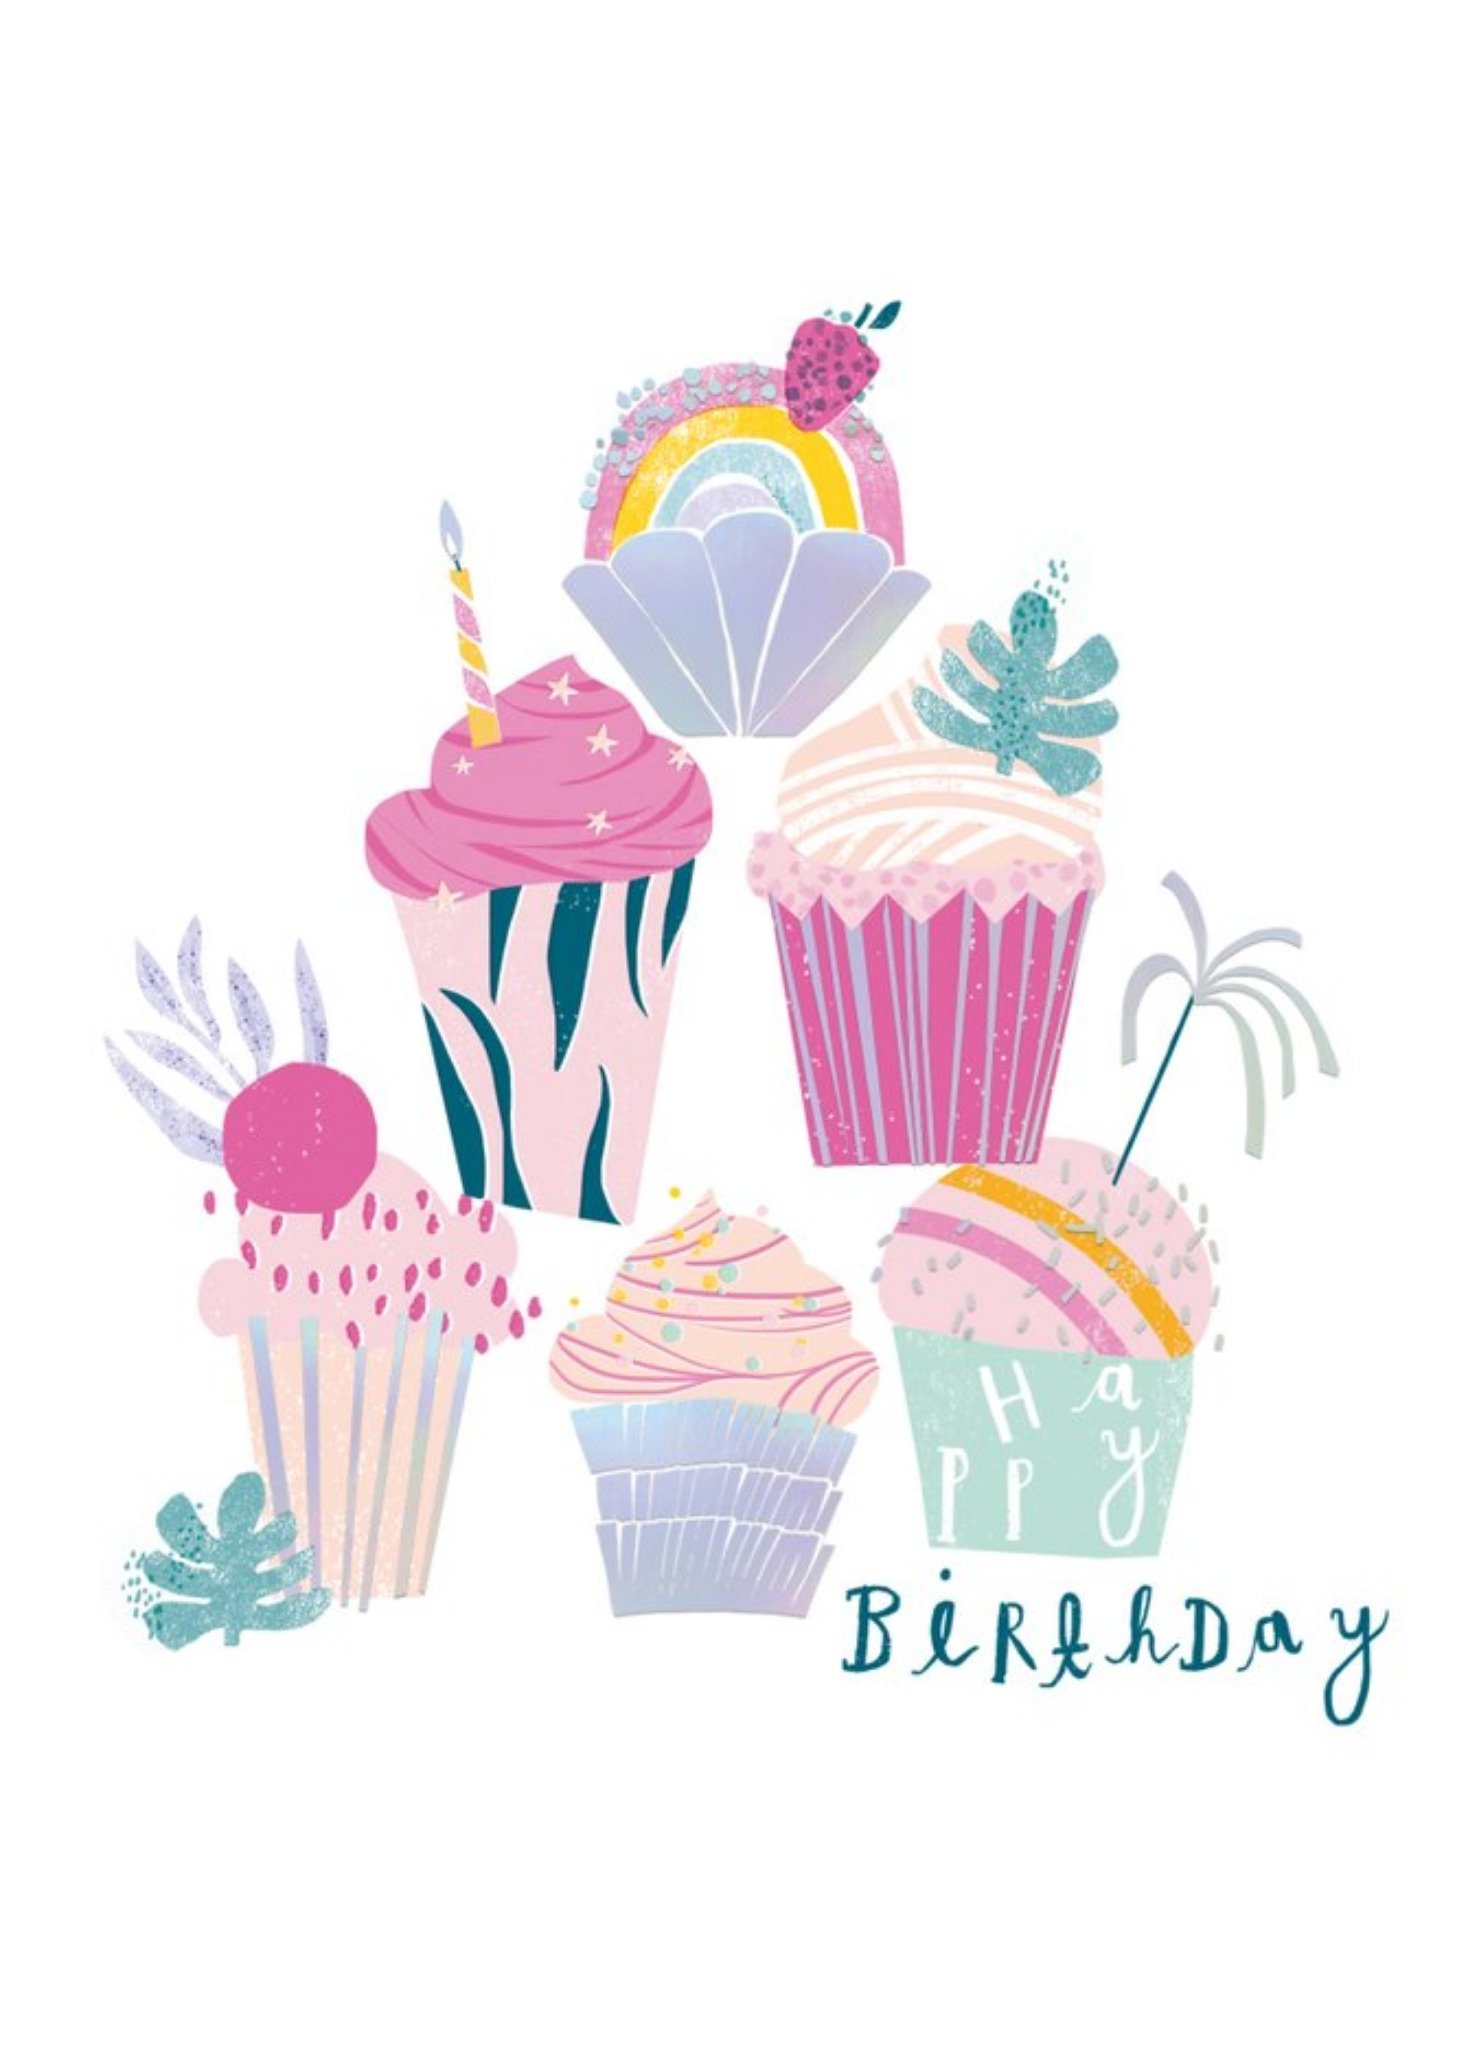 Moonpig Mermaid Colouful Fun Cupcakes Birthday Card Ecard